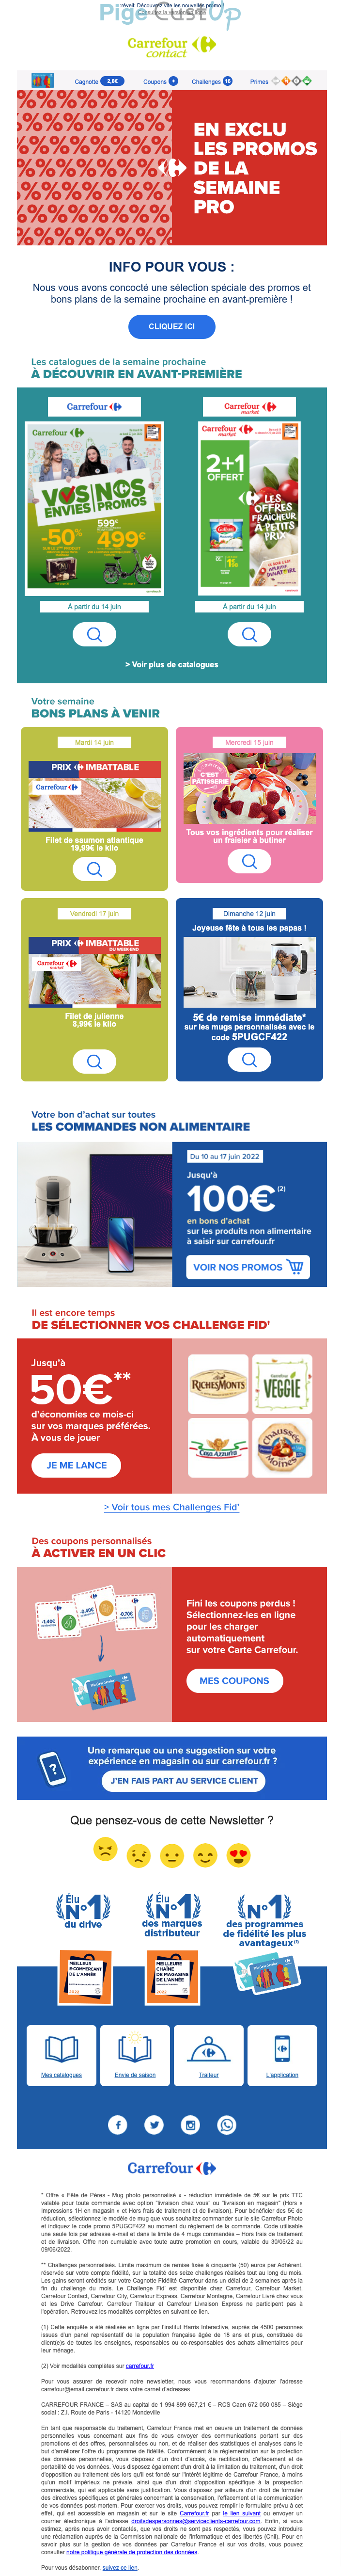 Exemple de Type de media   - Carrefour - Marketing relationnel - Newsletter